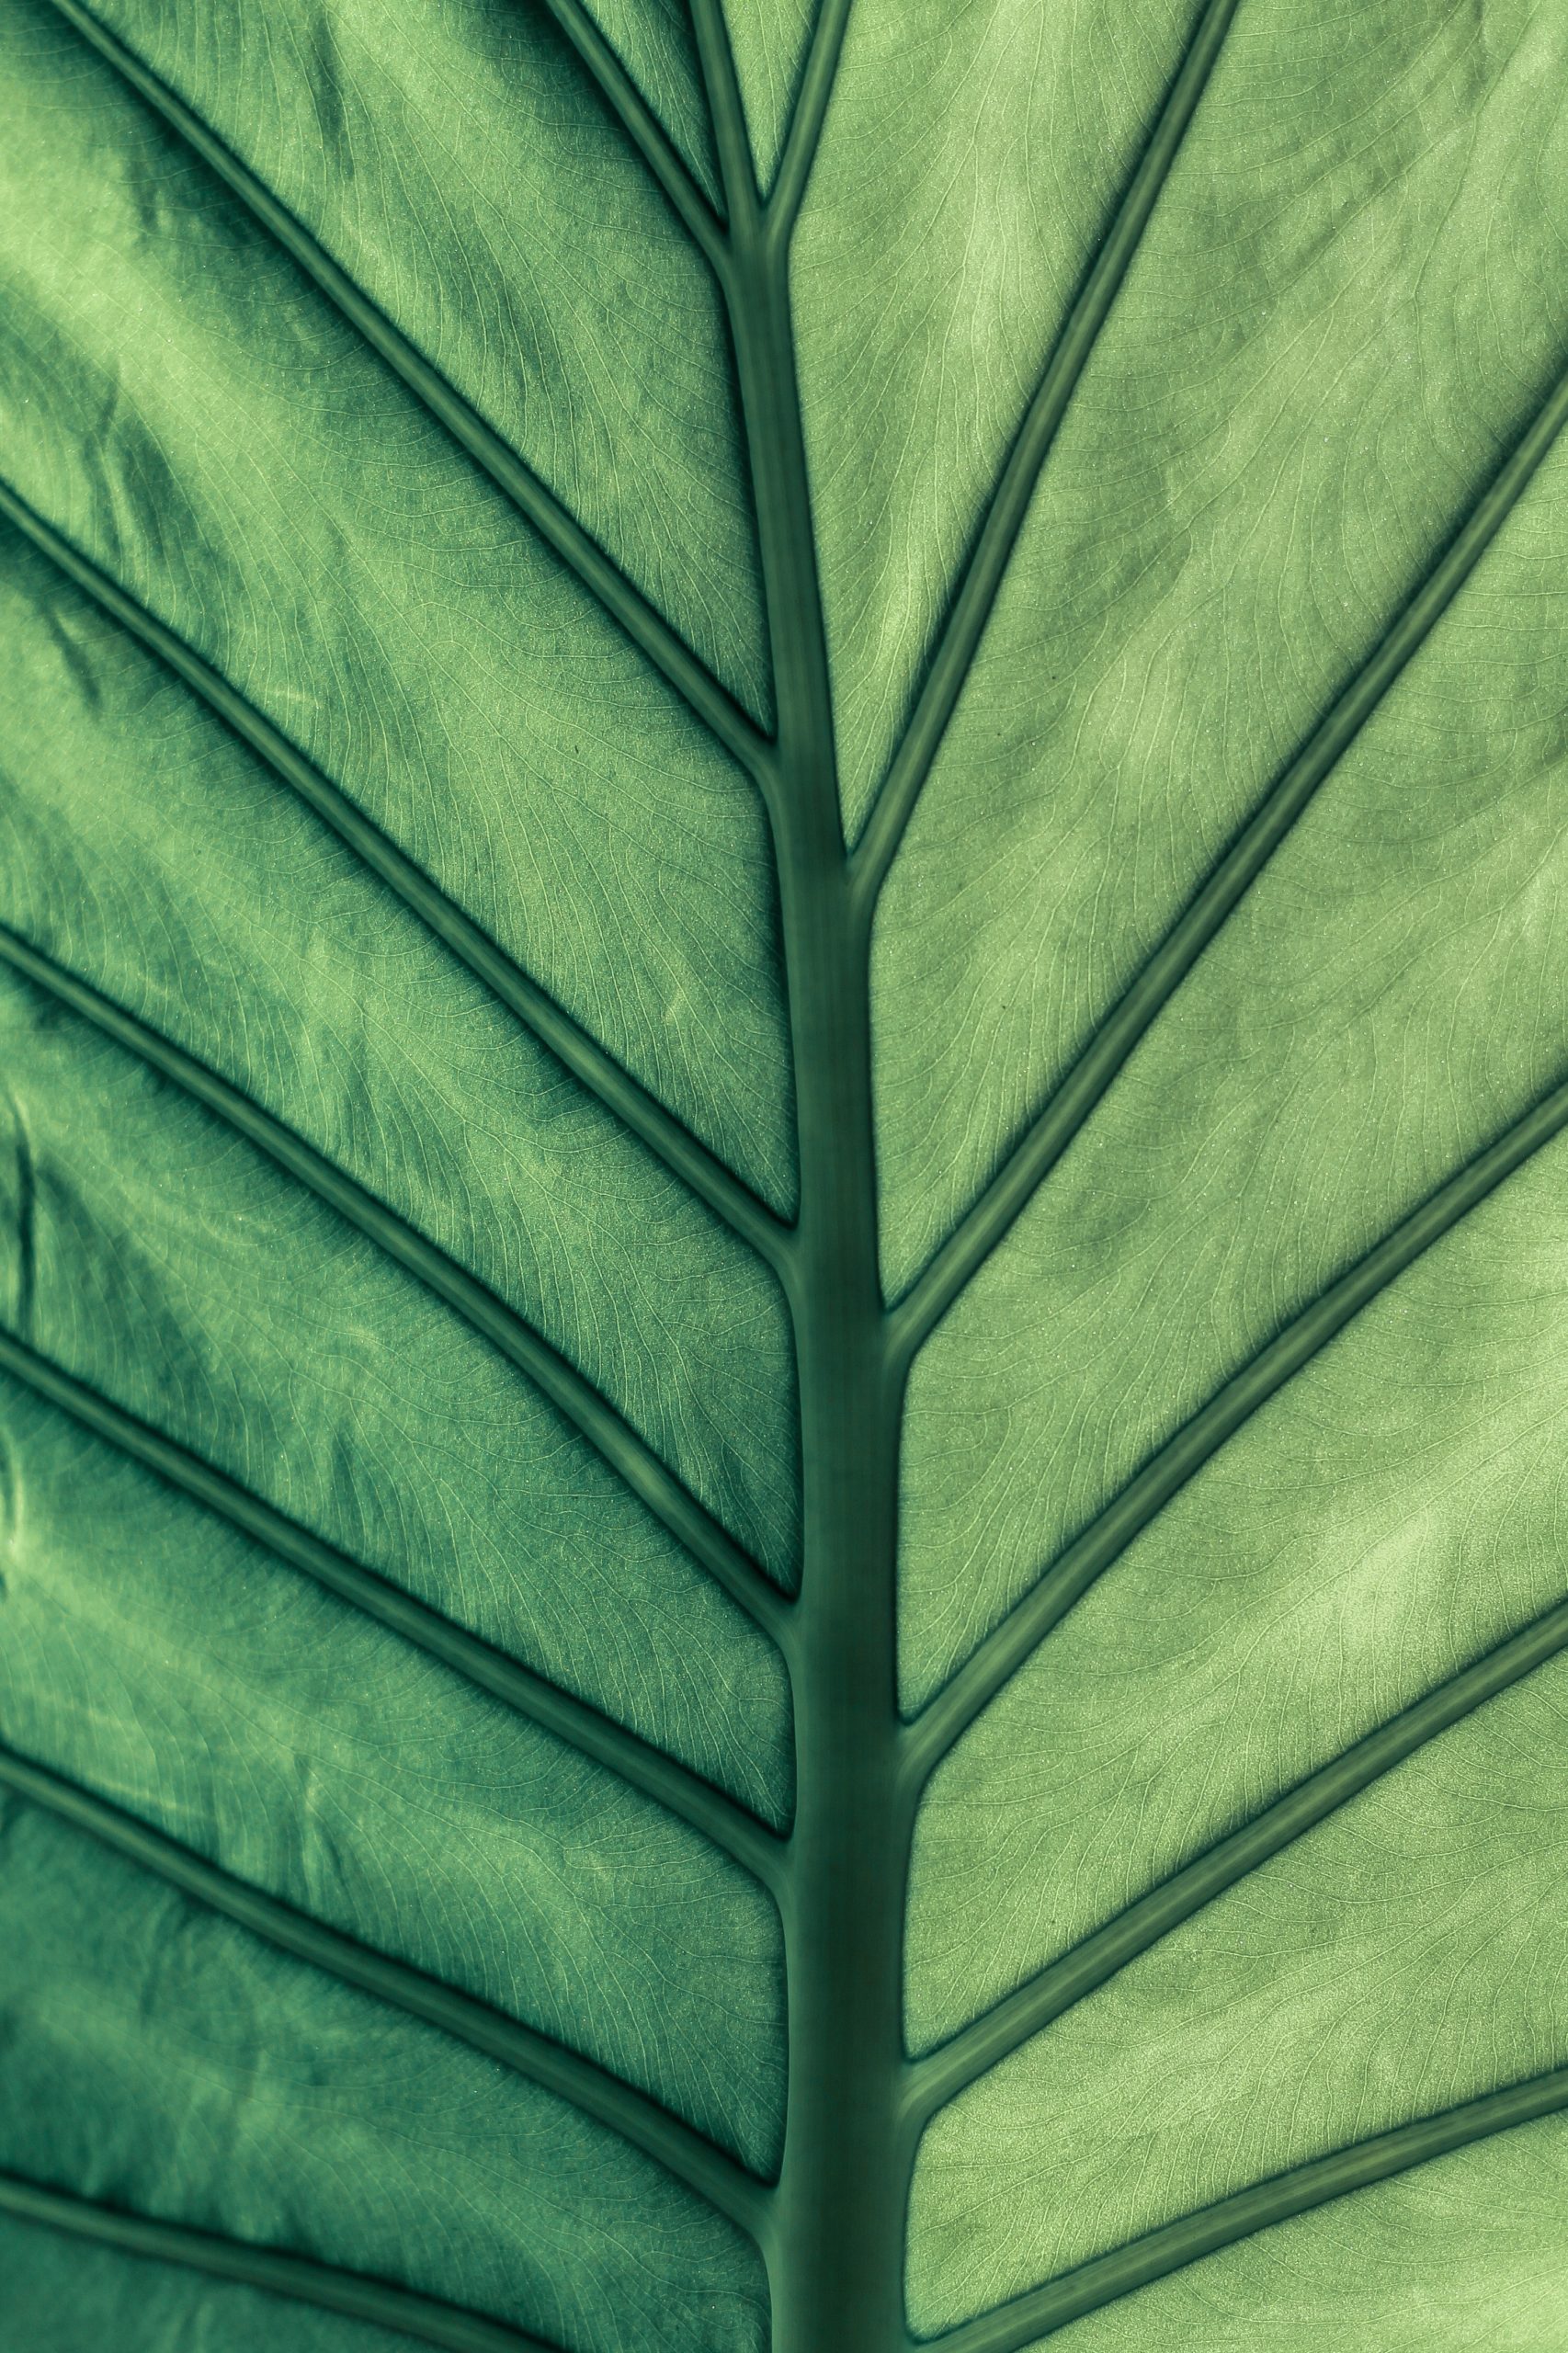 Plant leaf close up